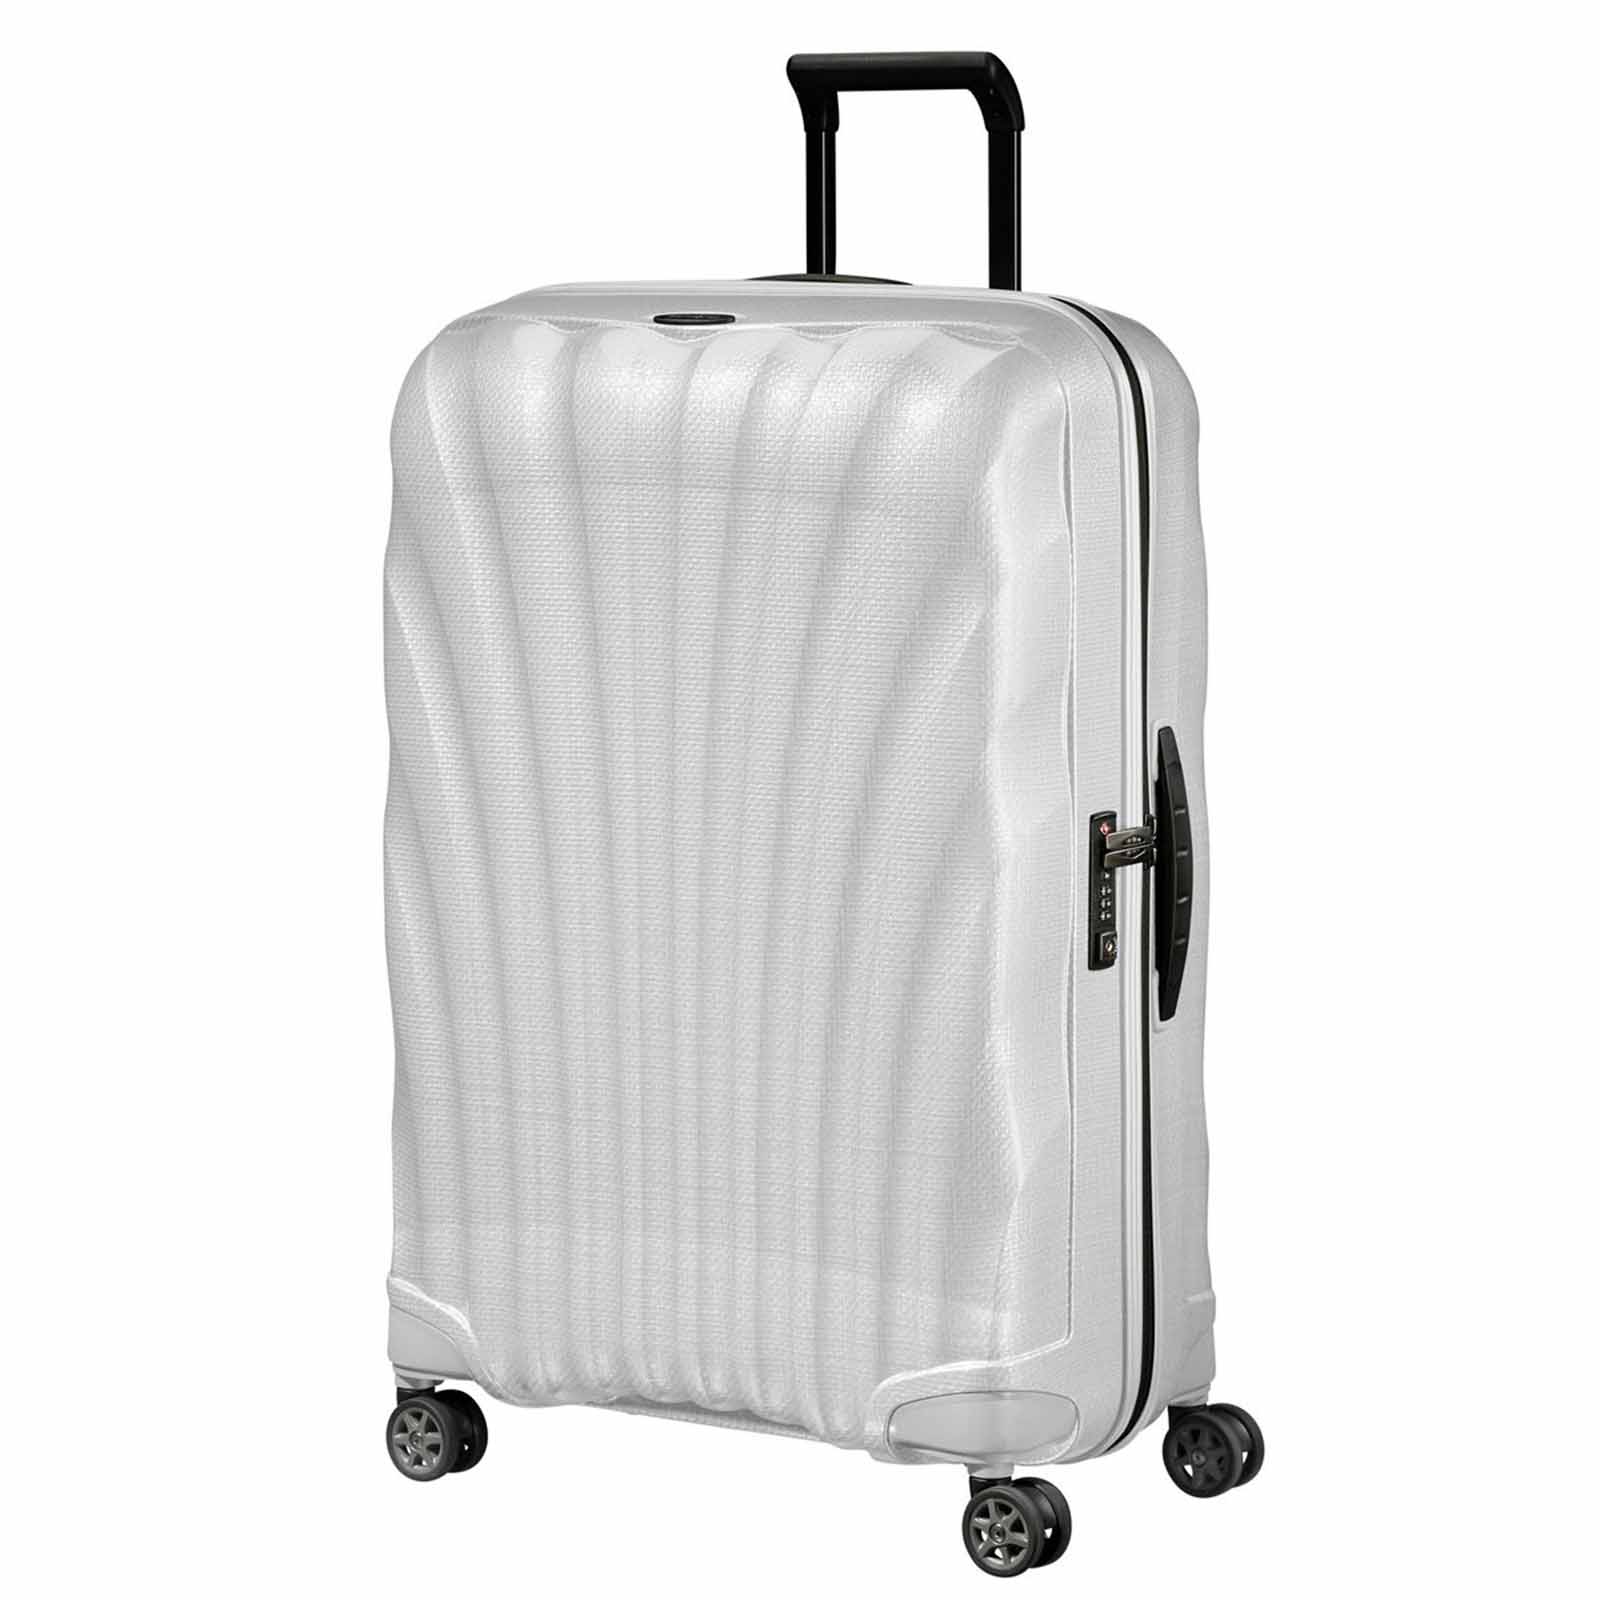 Samsonite-C-Lite-75cm-Suitcase-Midnight-Off-White-Front-Angle